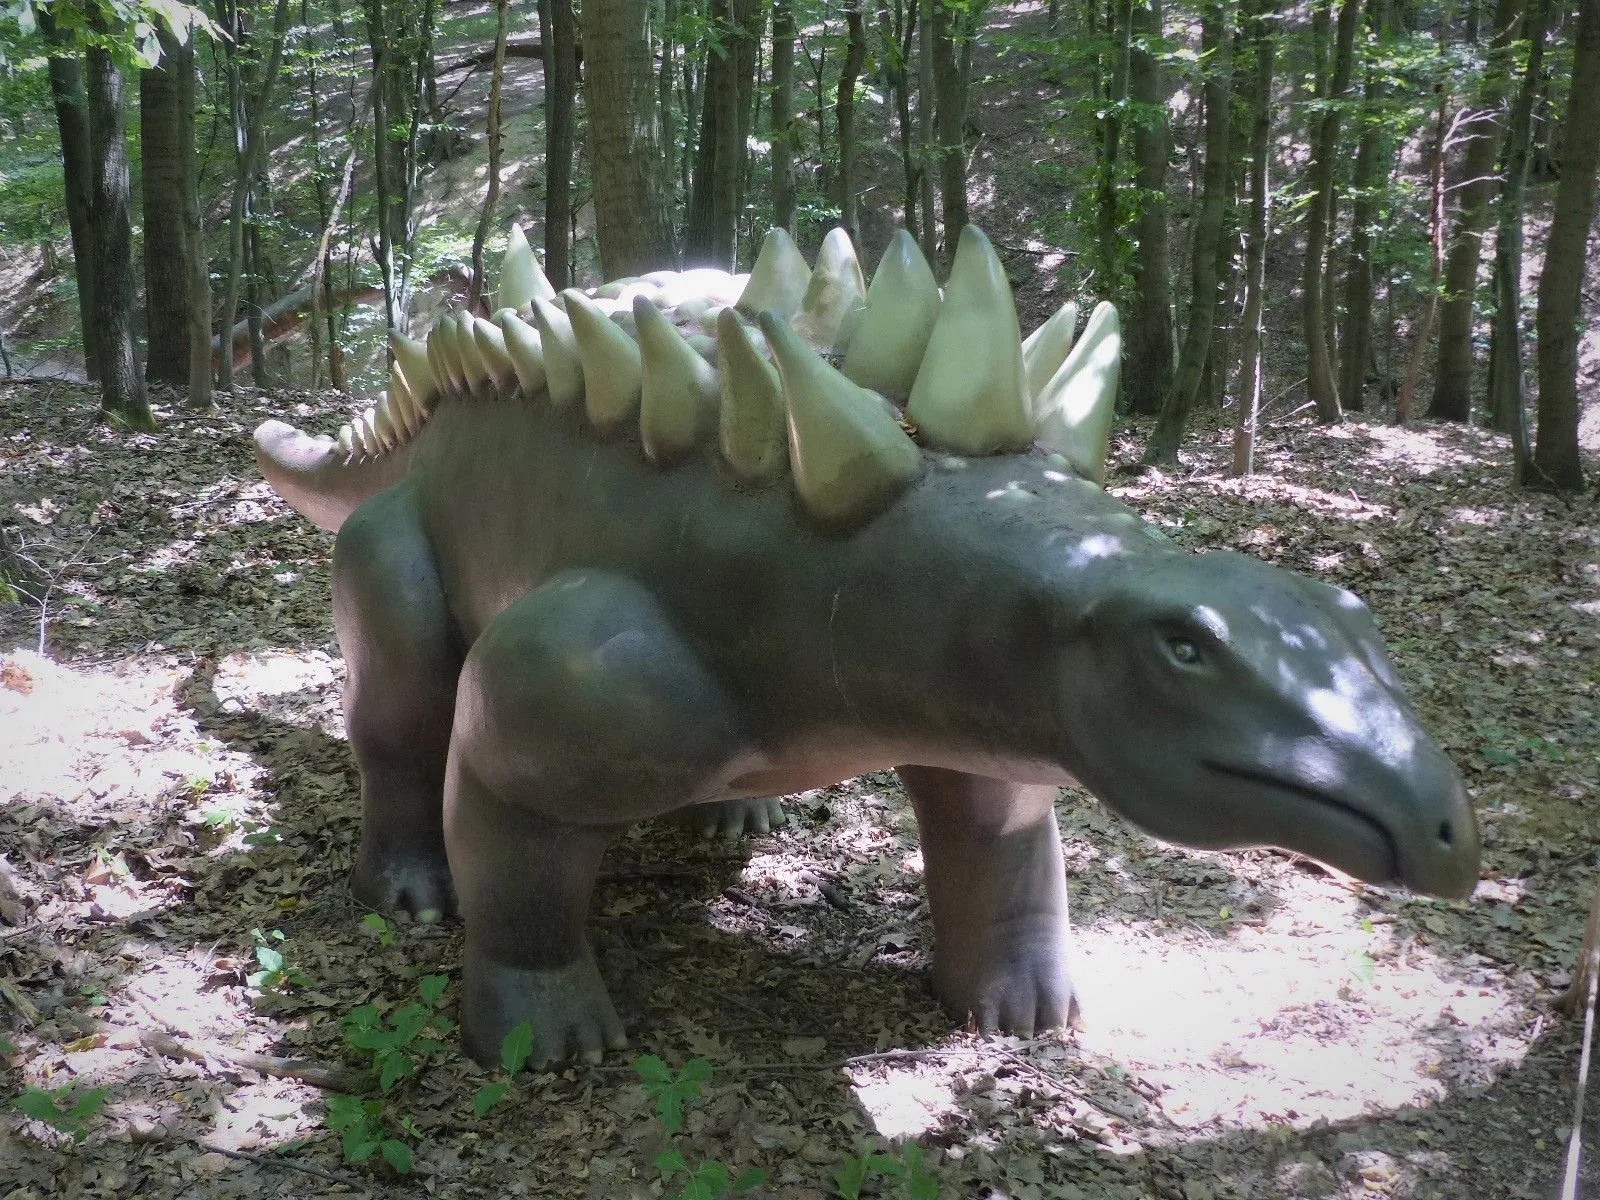 Hungarosaurus lived in the Santonian age.